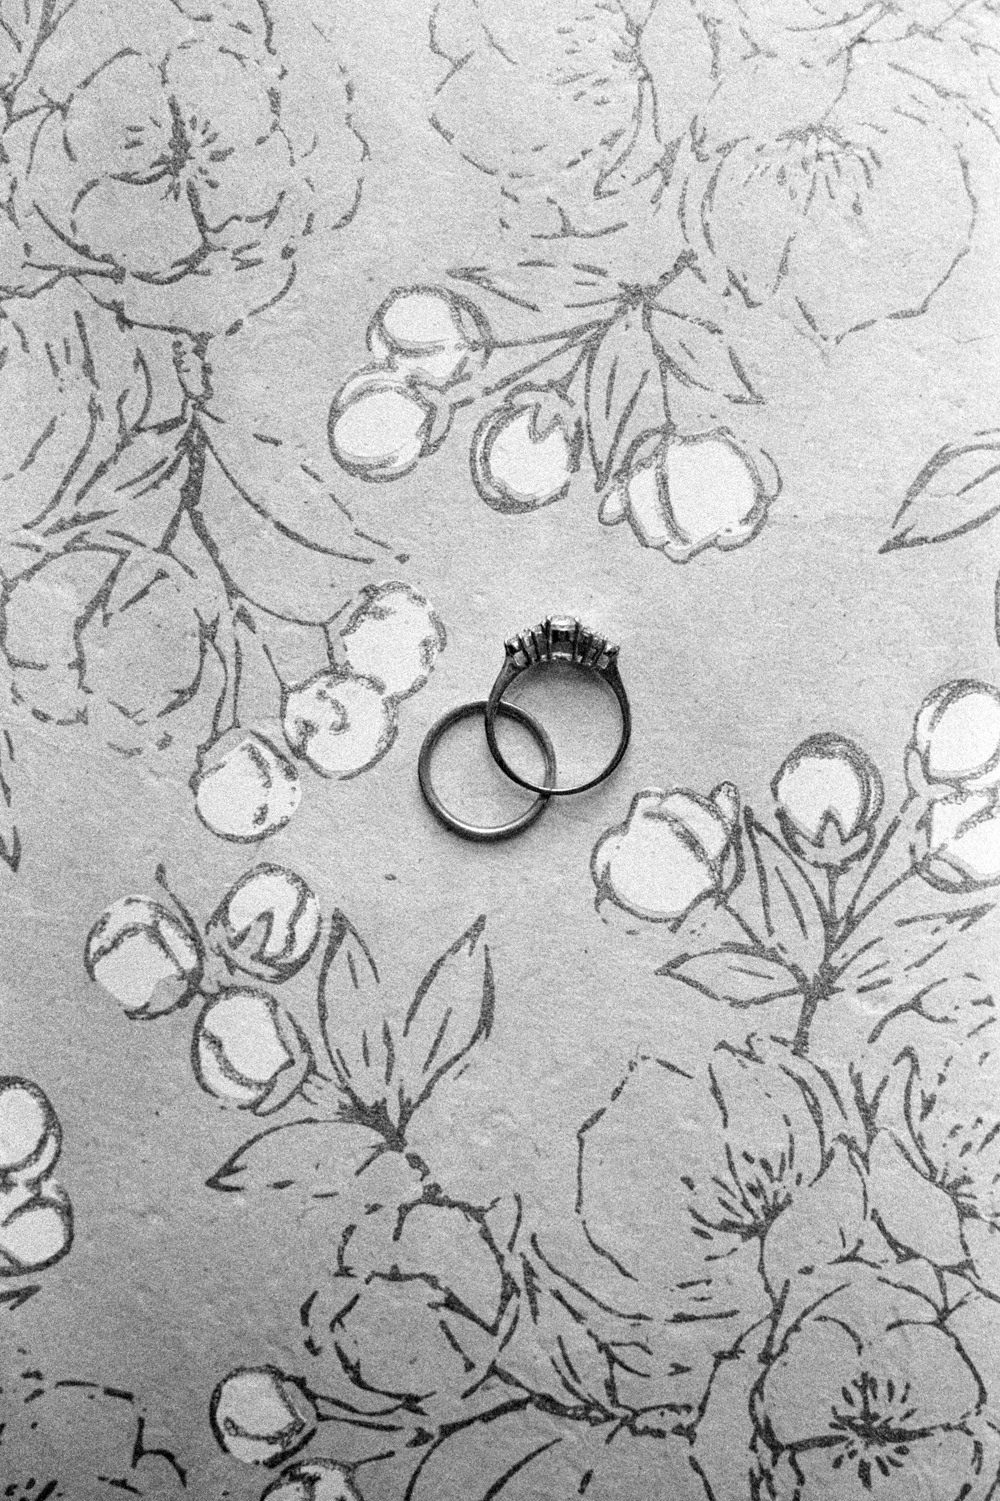 wedding-details-rings-bands-christine-gosch-film-photographer-black-and-white-houston-texas-wedding-venue-35mm-photography-fine-art-8.jpg